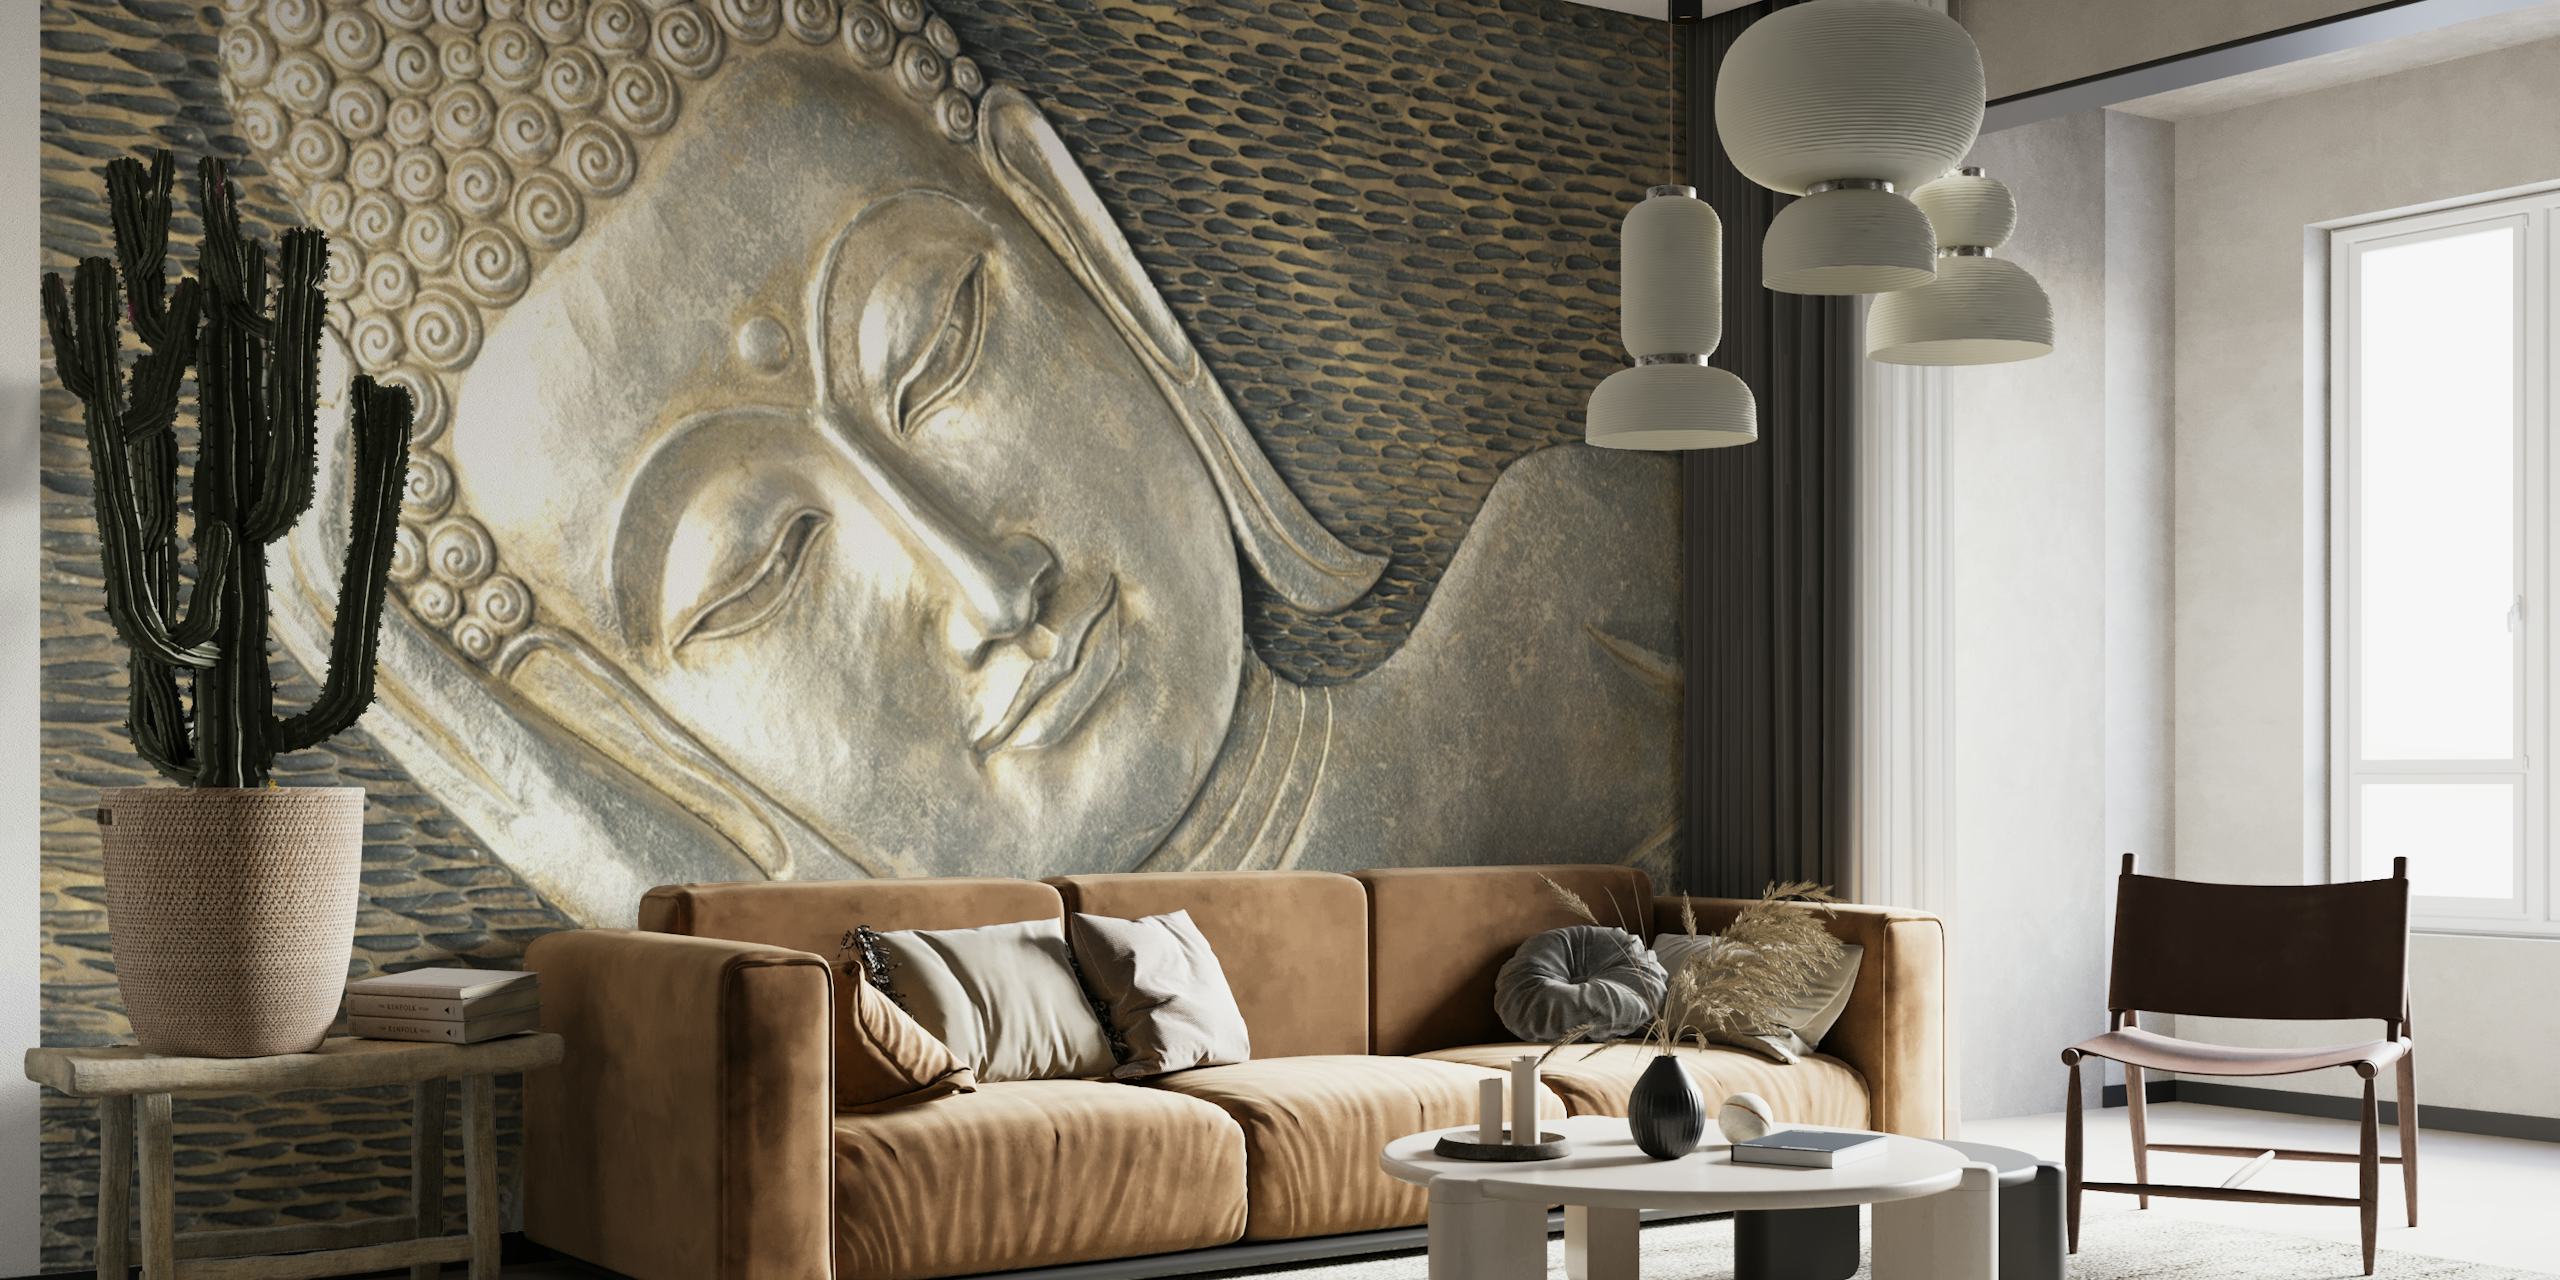 The Sleeping Buddha wallpaper